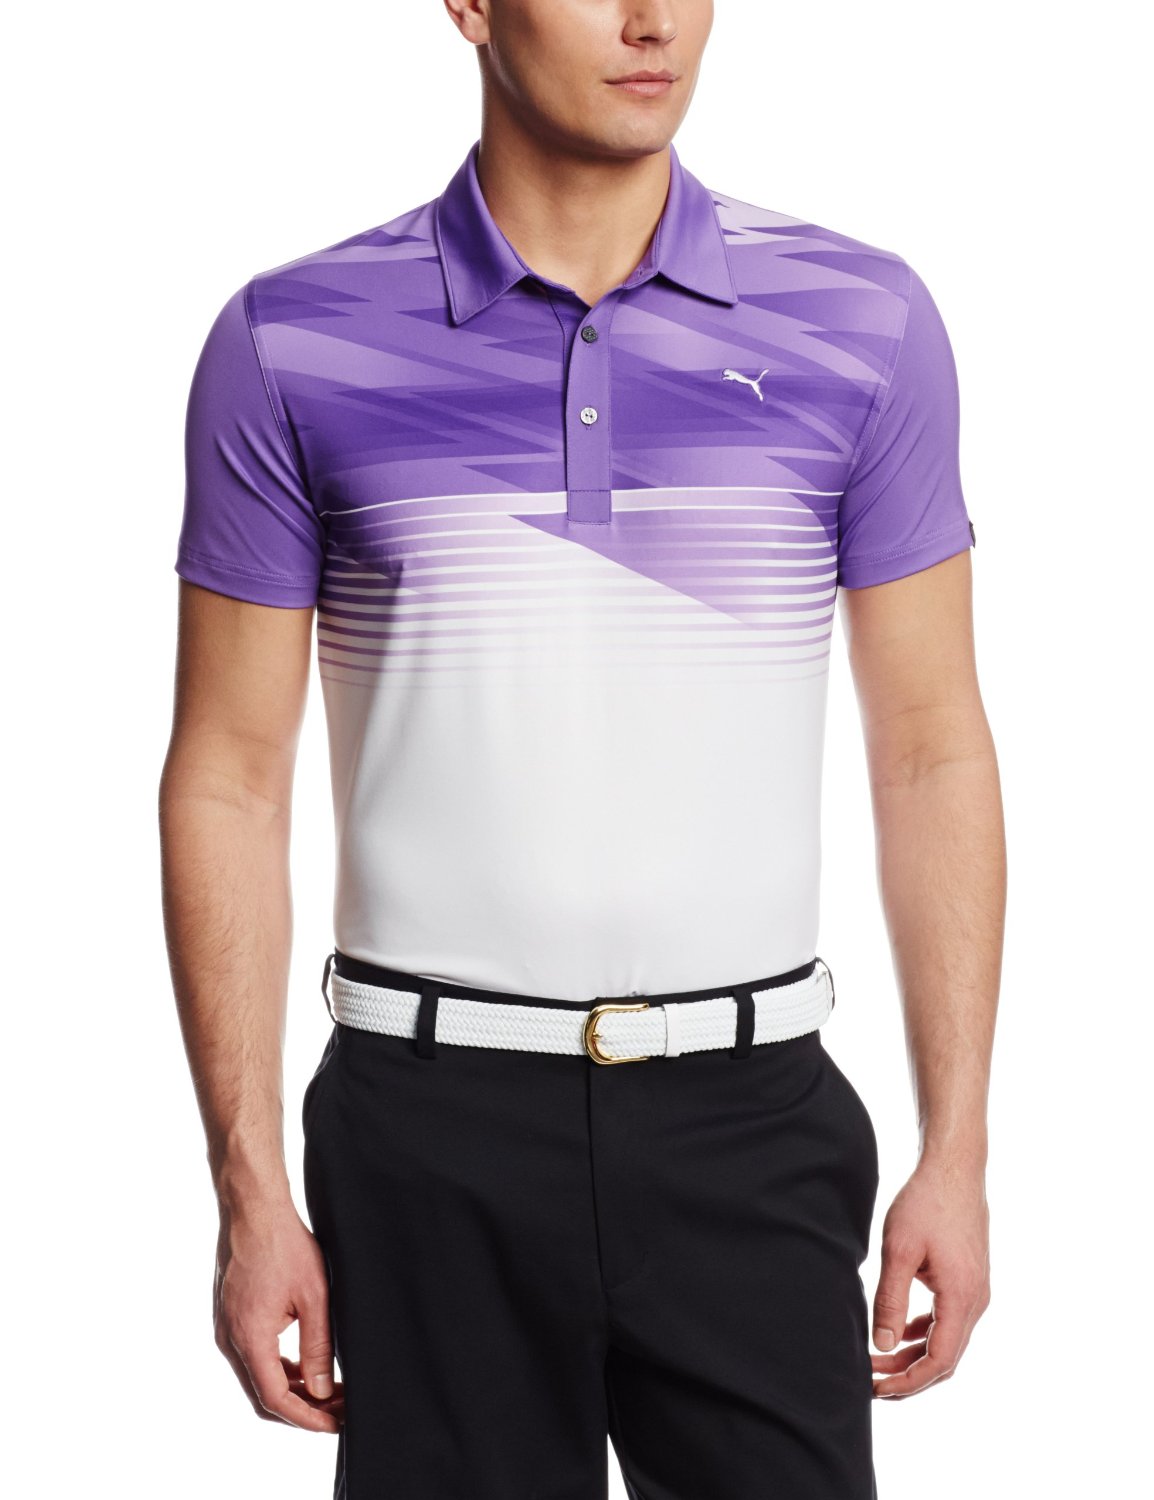 discount puma golf apparel